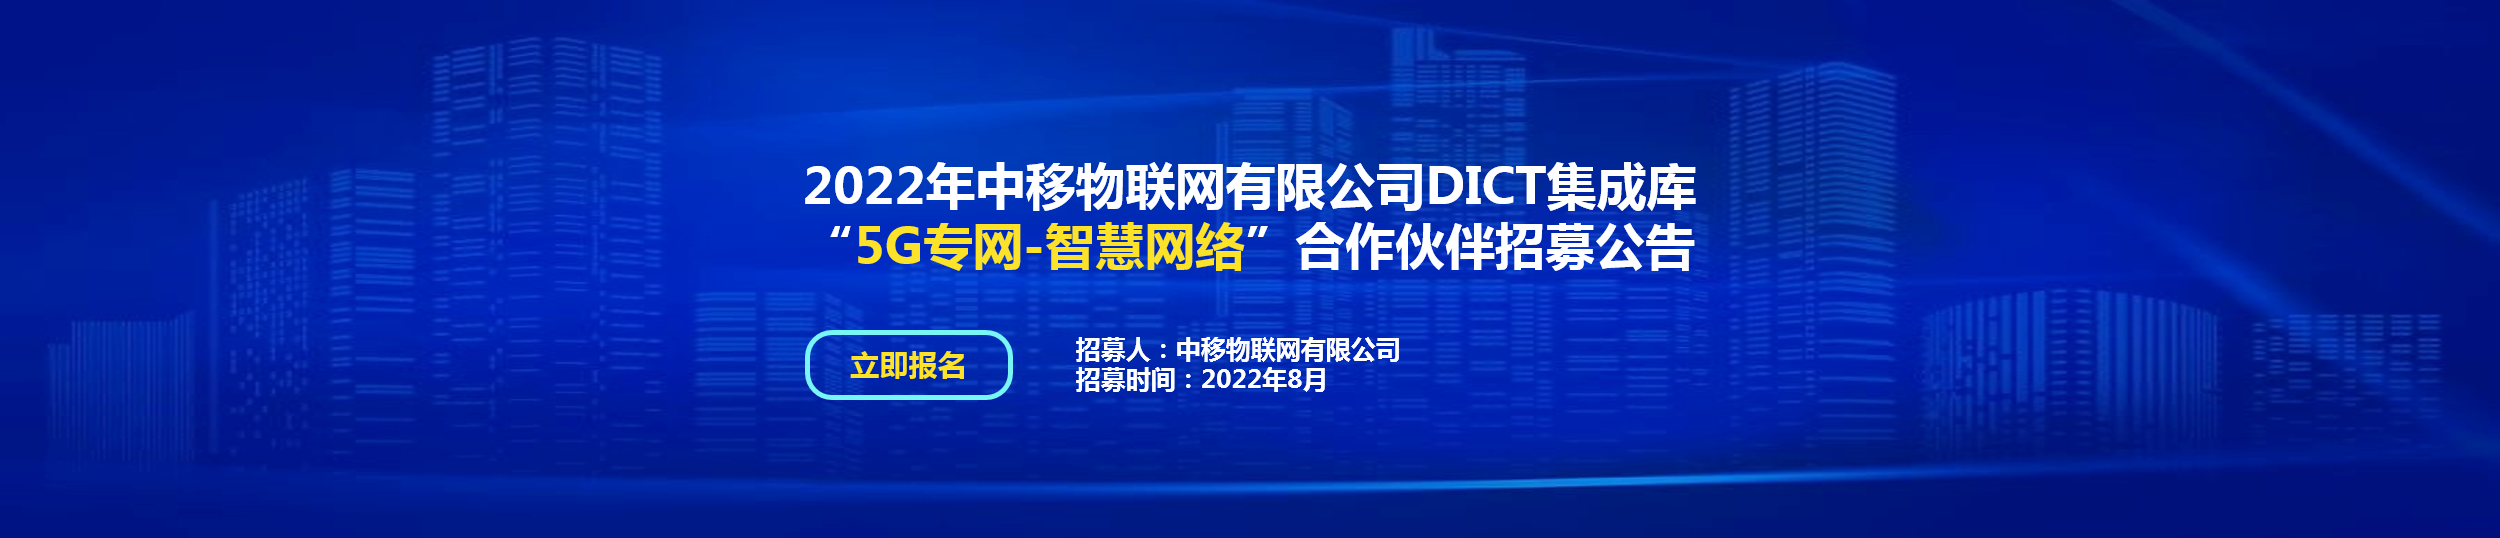 DICT集成库 “5G专网-智慧网络”